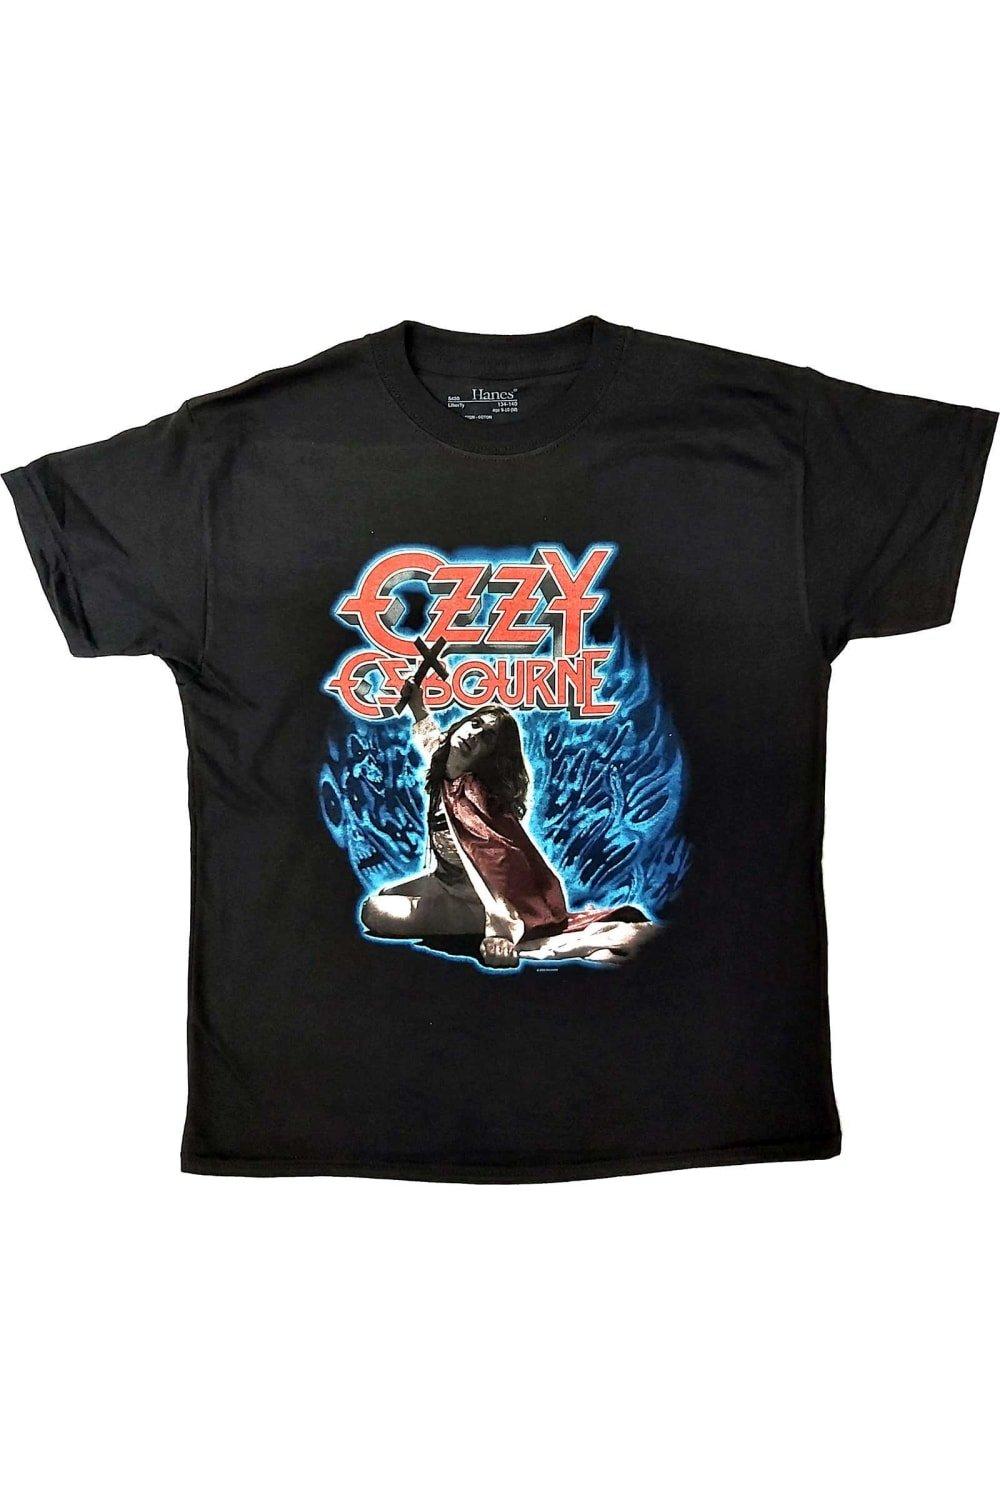 Хлопковая футболка Blizzard Of Ozz Ozzy Osbourne, черный osbourne ozzy виниловая пластинка osbourne ozzy blizzard of ozz